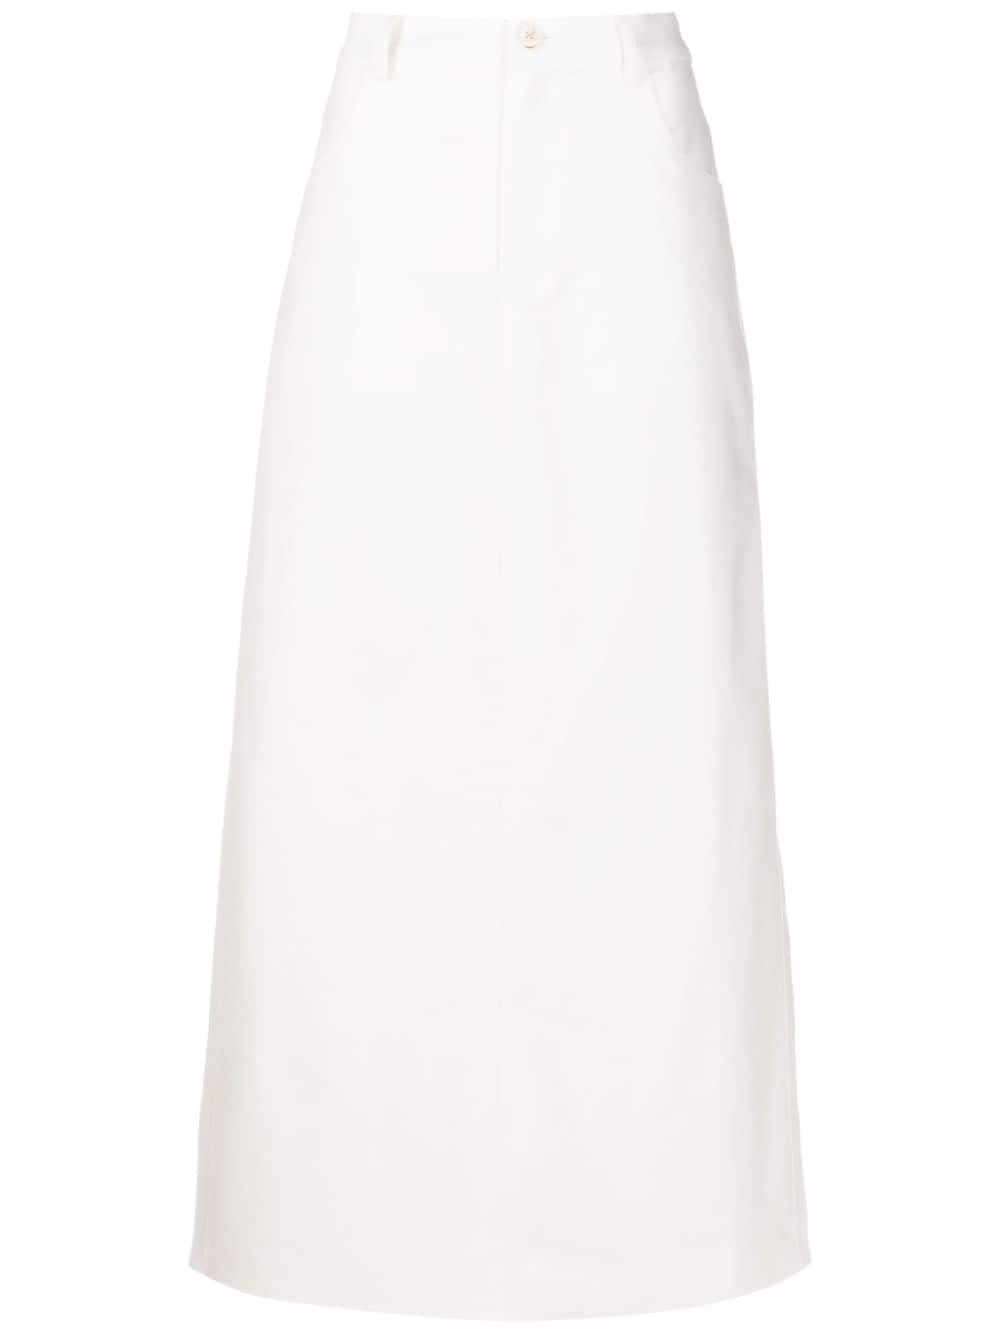 Uma | Raquel Davidowicz A-line straight-cut skirt - White von Uma | Raquel Davidowicz